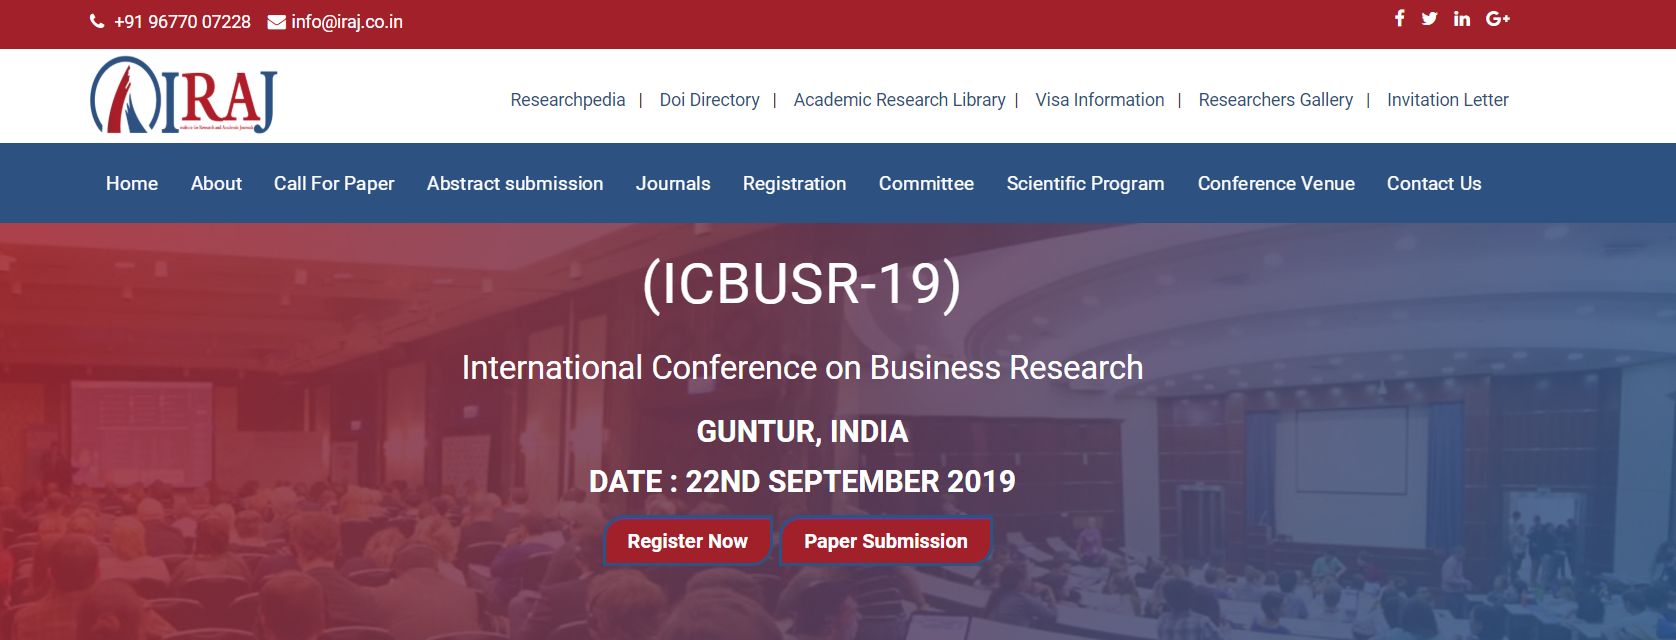 International Conference on Business Research (ICBUSR-19), Guntur, Andhra Pradesh, India